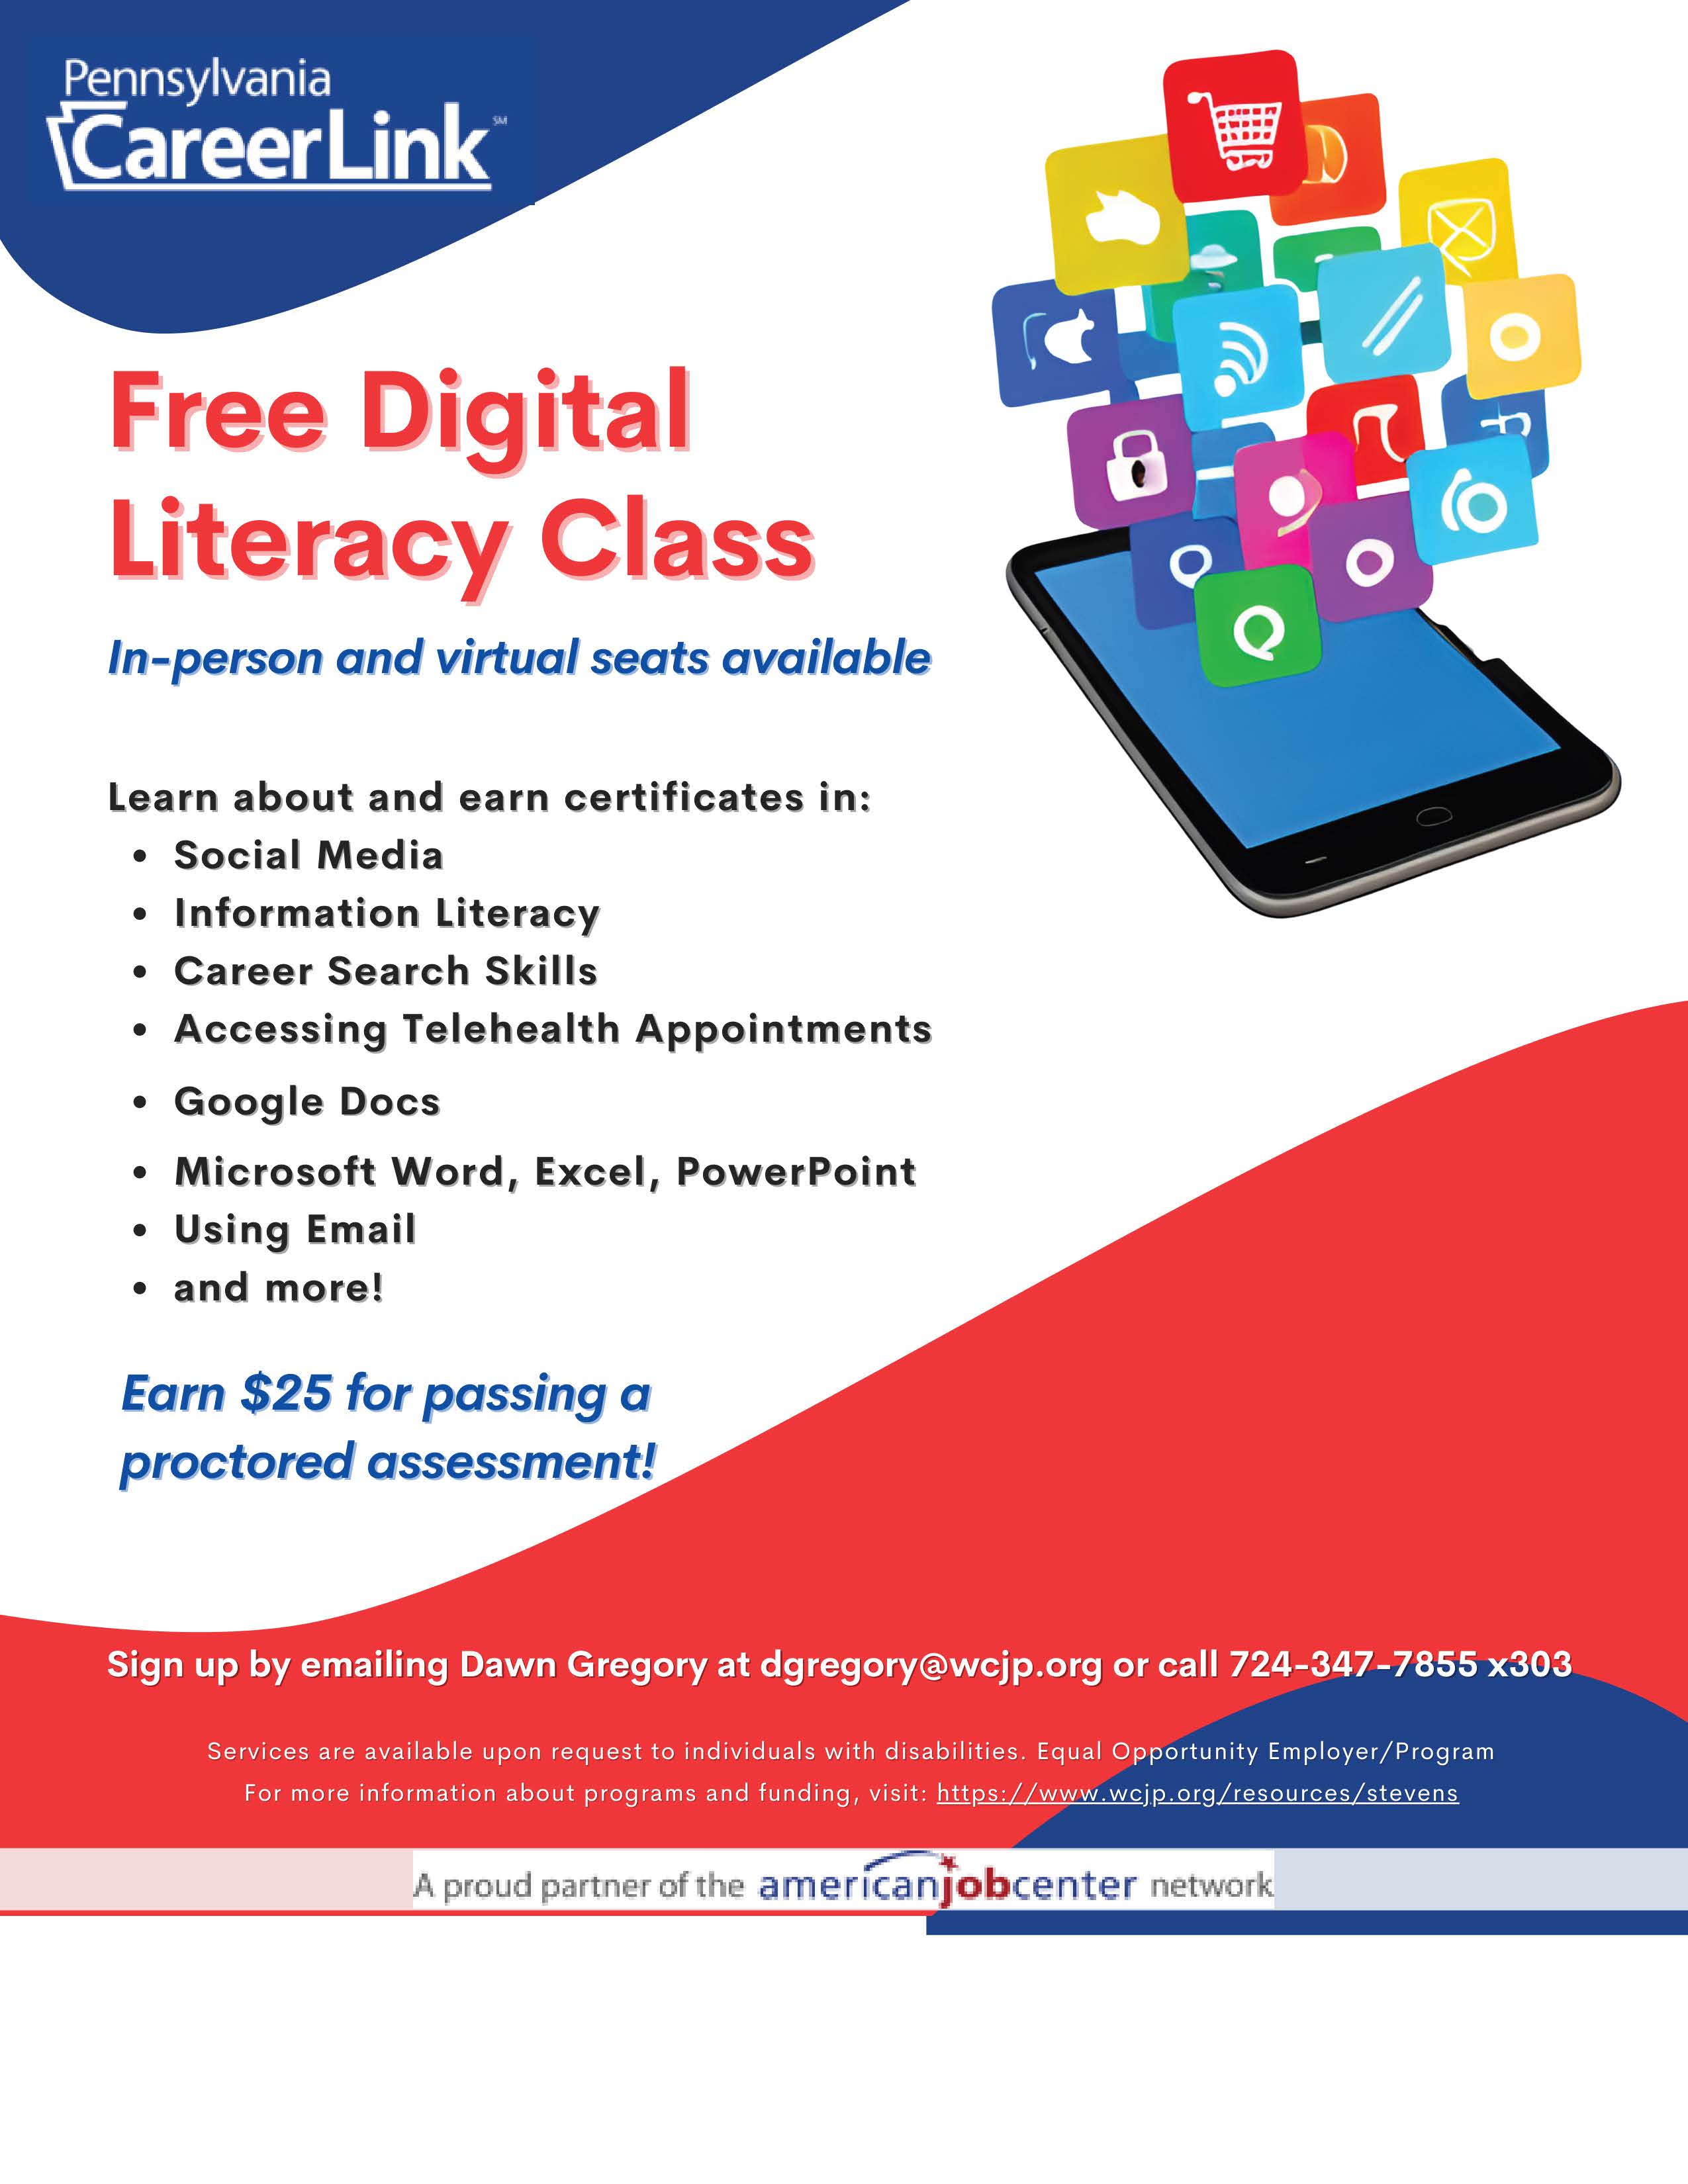 Free Digital Literacy Class Flyer